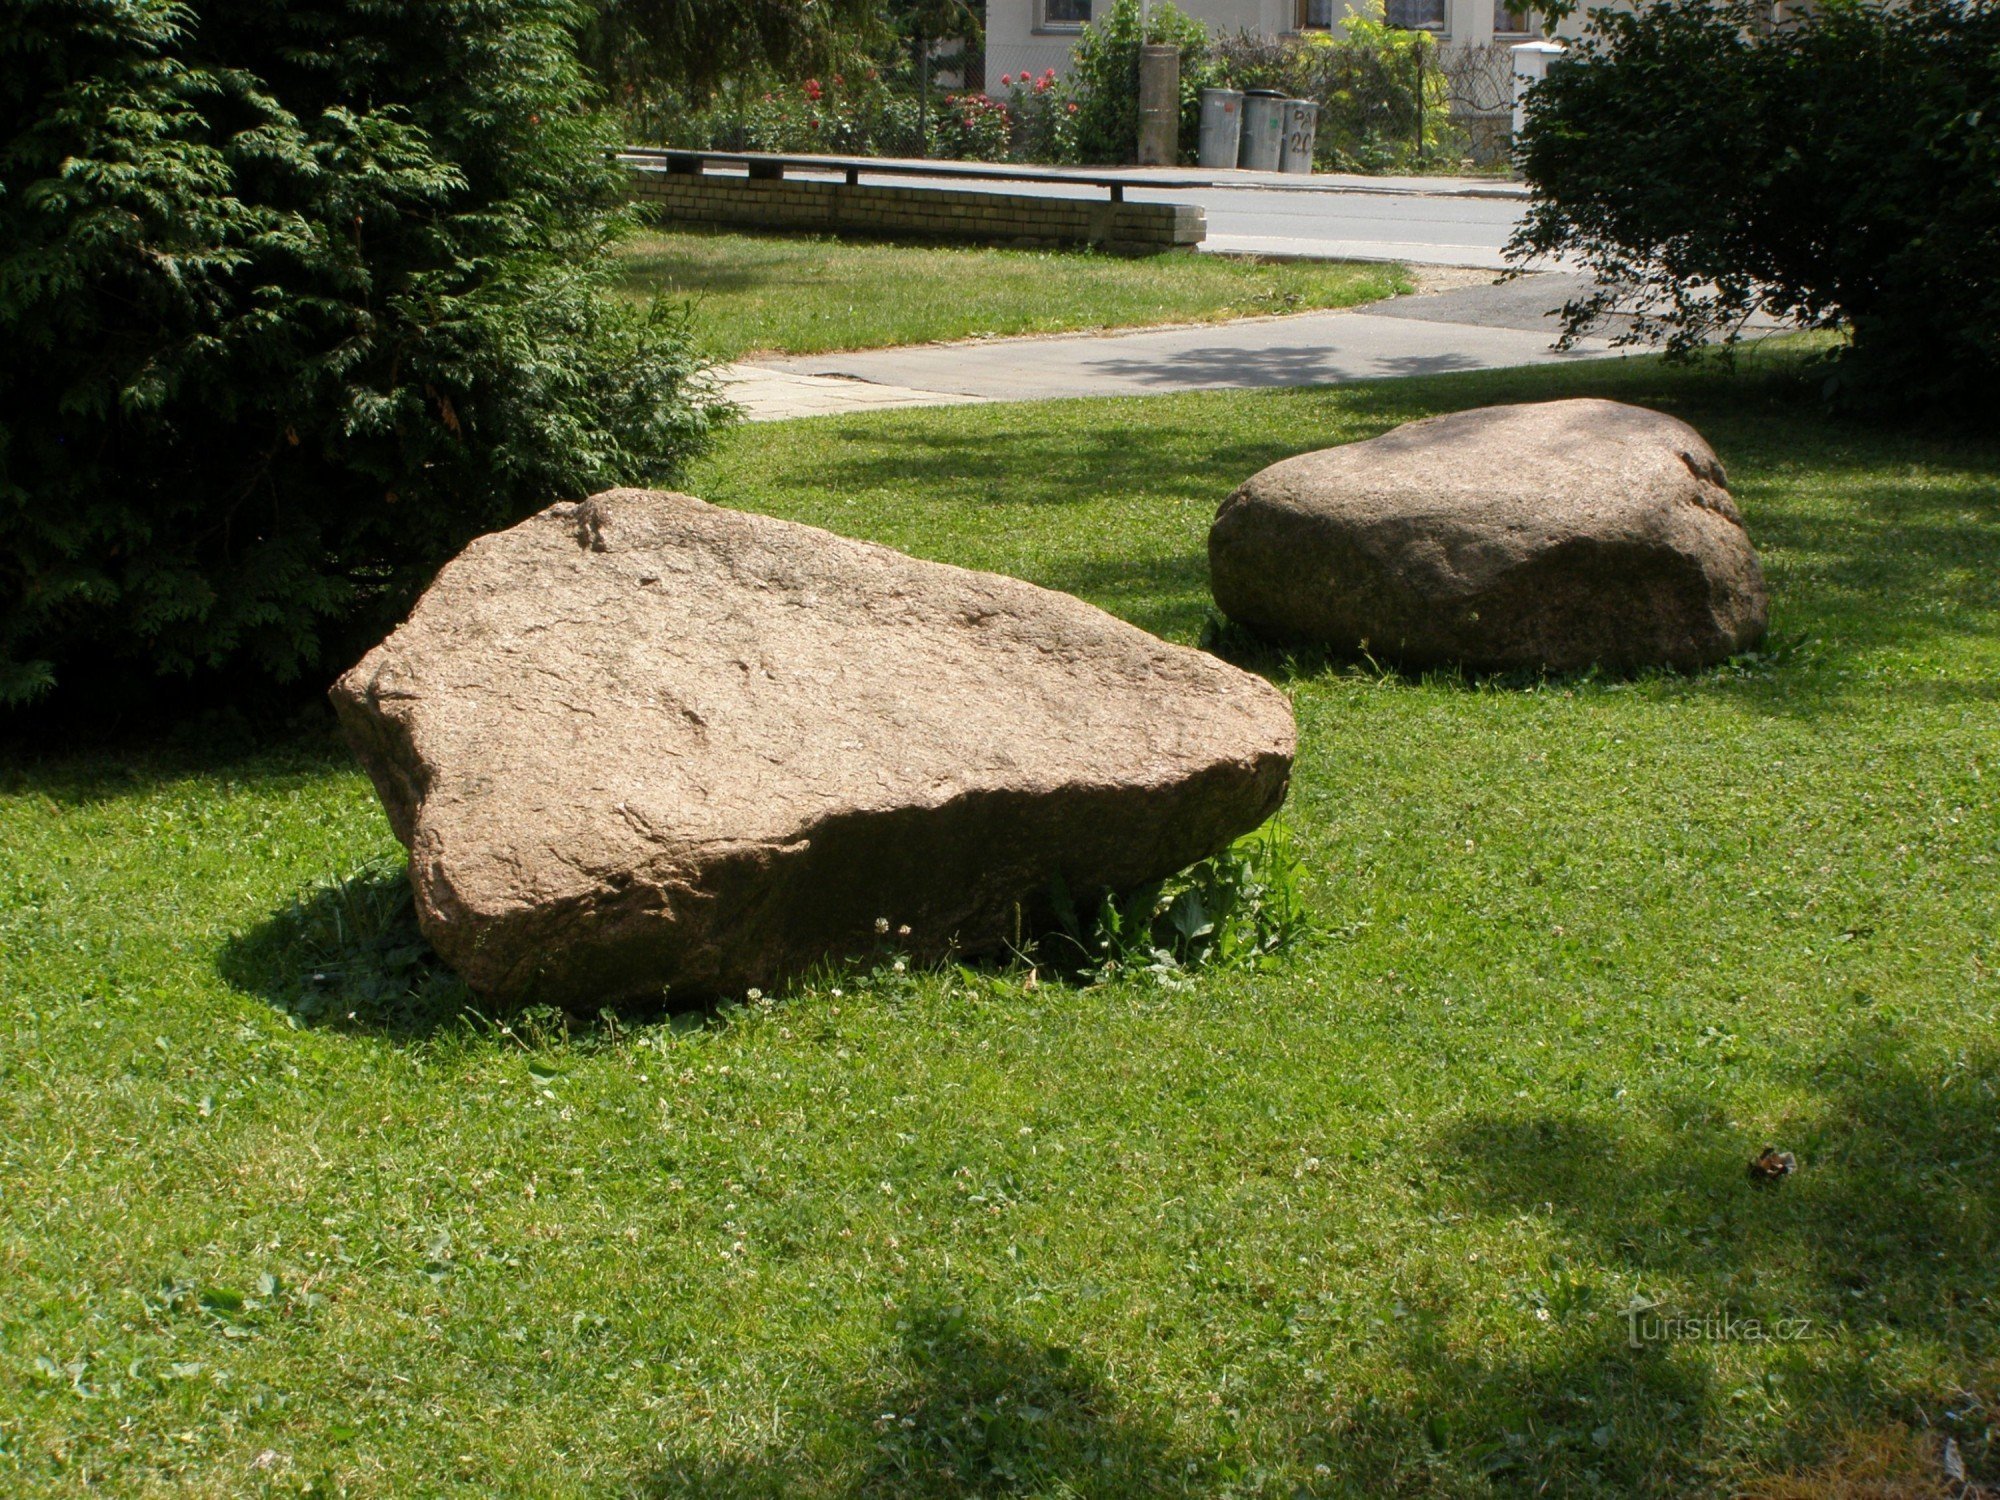 Javorník - Jardim de pedras errantes